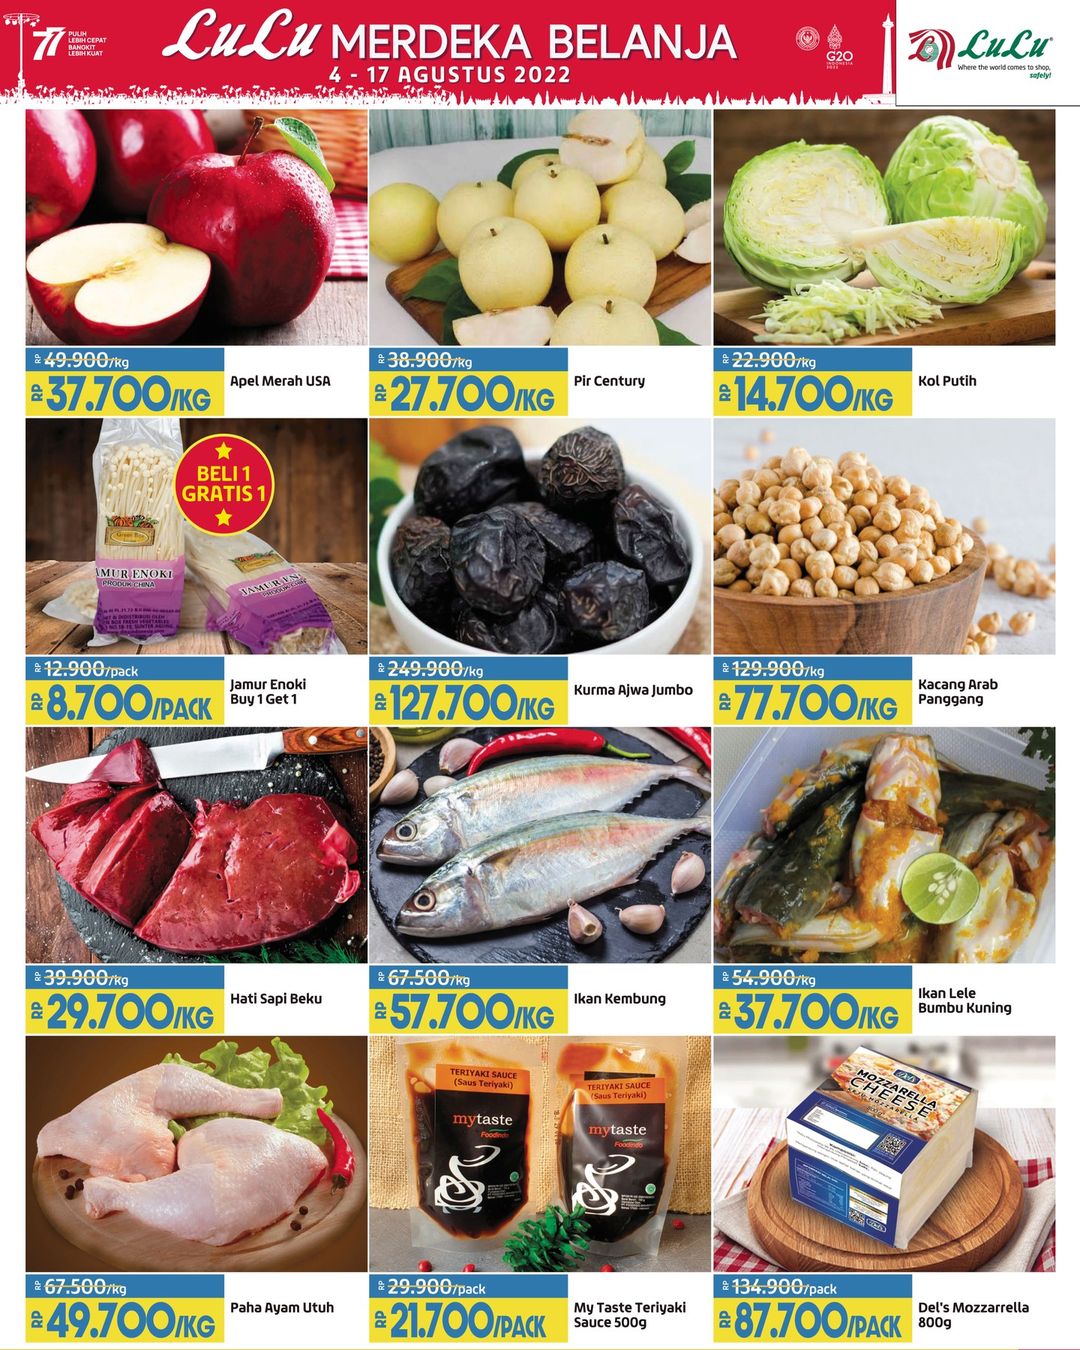 Katalog LuLu Hypermarket & Department Store MERDEKA BELANJA! Belanja hemat HINGGA 50% periode 04-17 AGUSTUS 2022